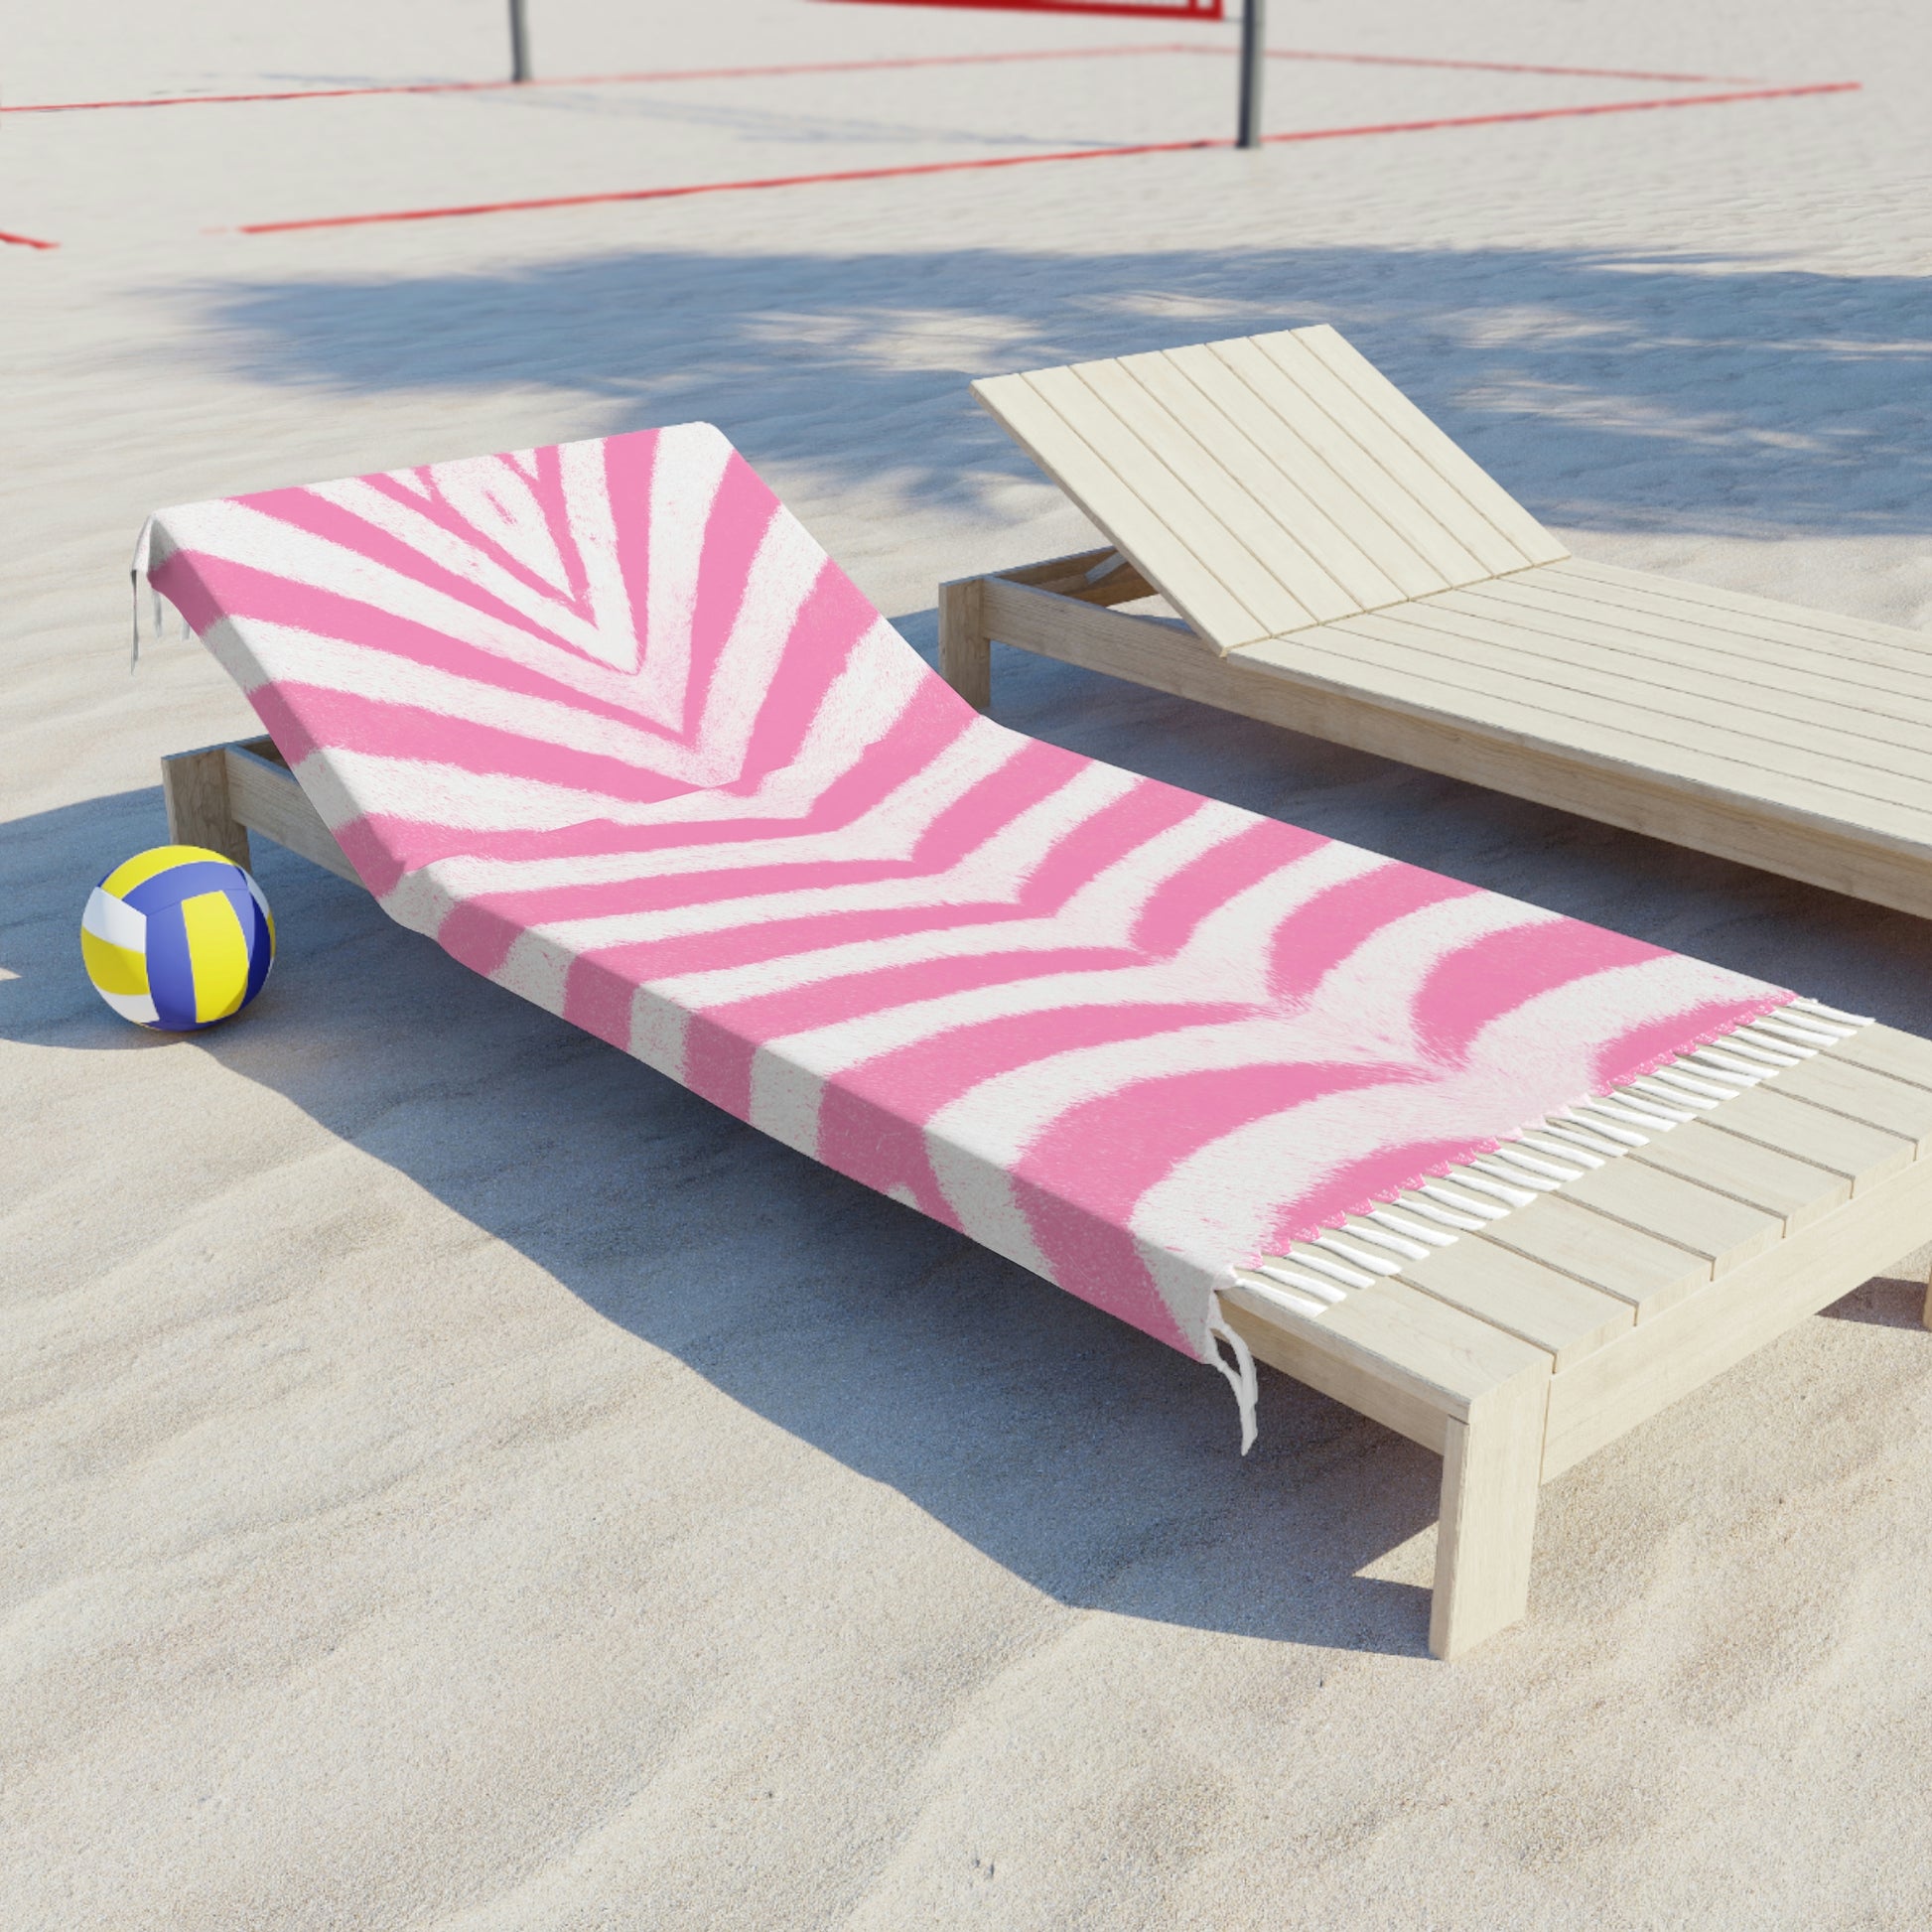 Boho Beach Blanket - Pink And White Striped - BRYKNOLO LLC Home Decor